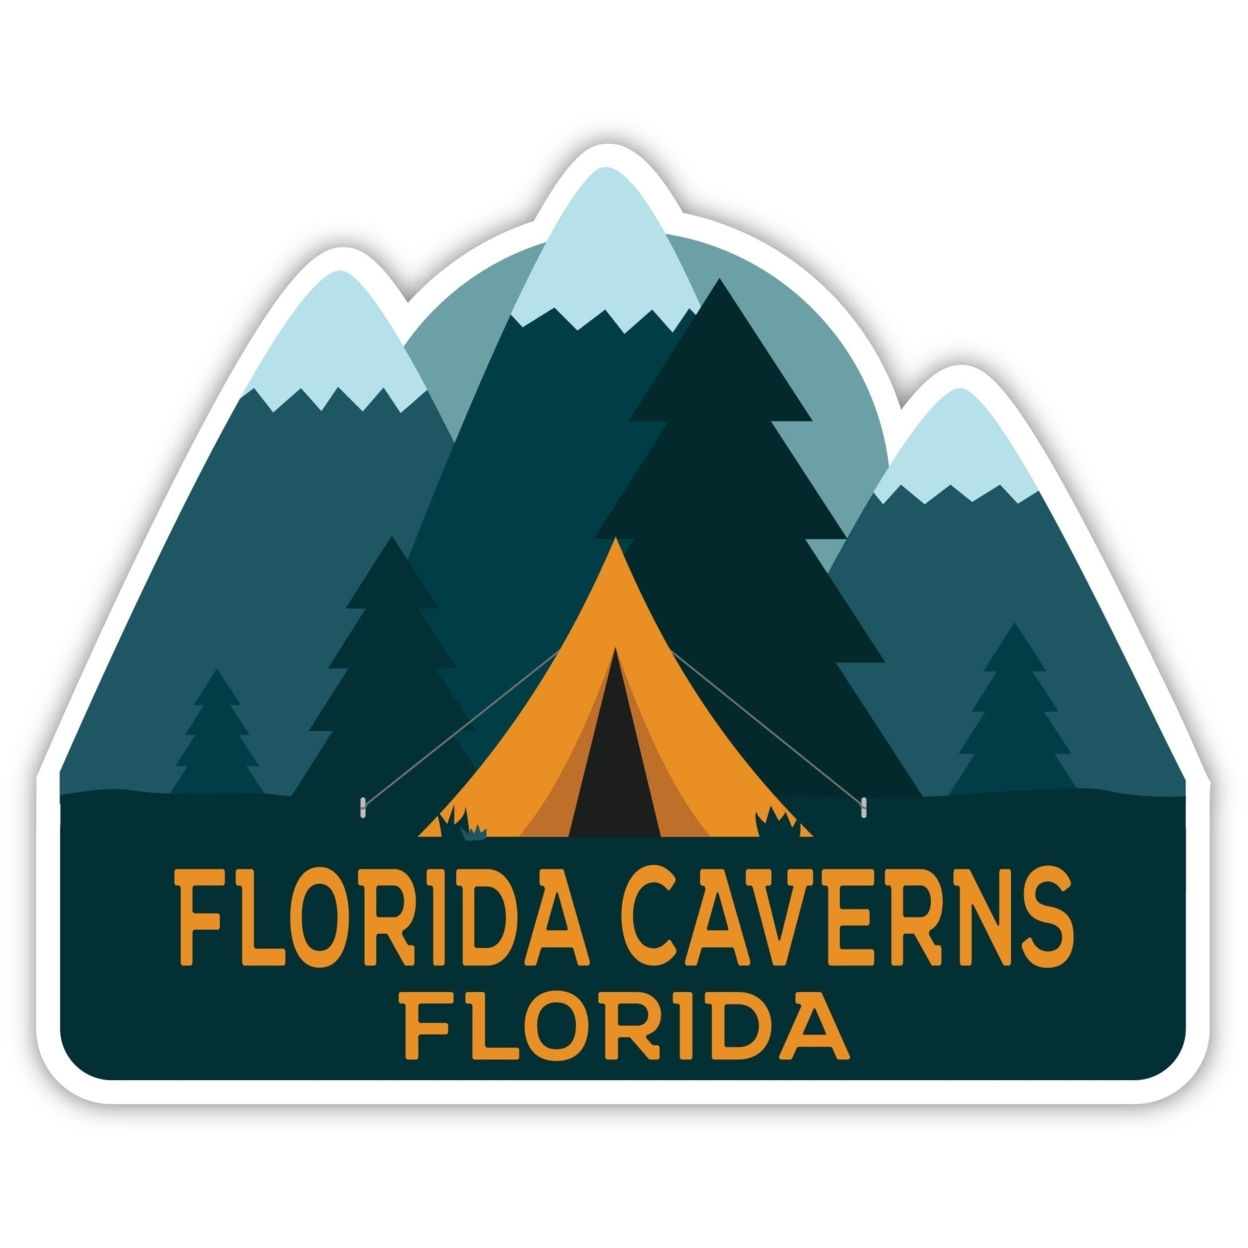 Florida Caverns Florida Souvenir Decorative Stickers (Choose Theme And Size) - 4-Pack, 4-Inch, Tent